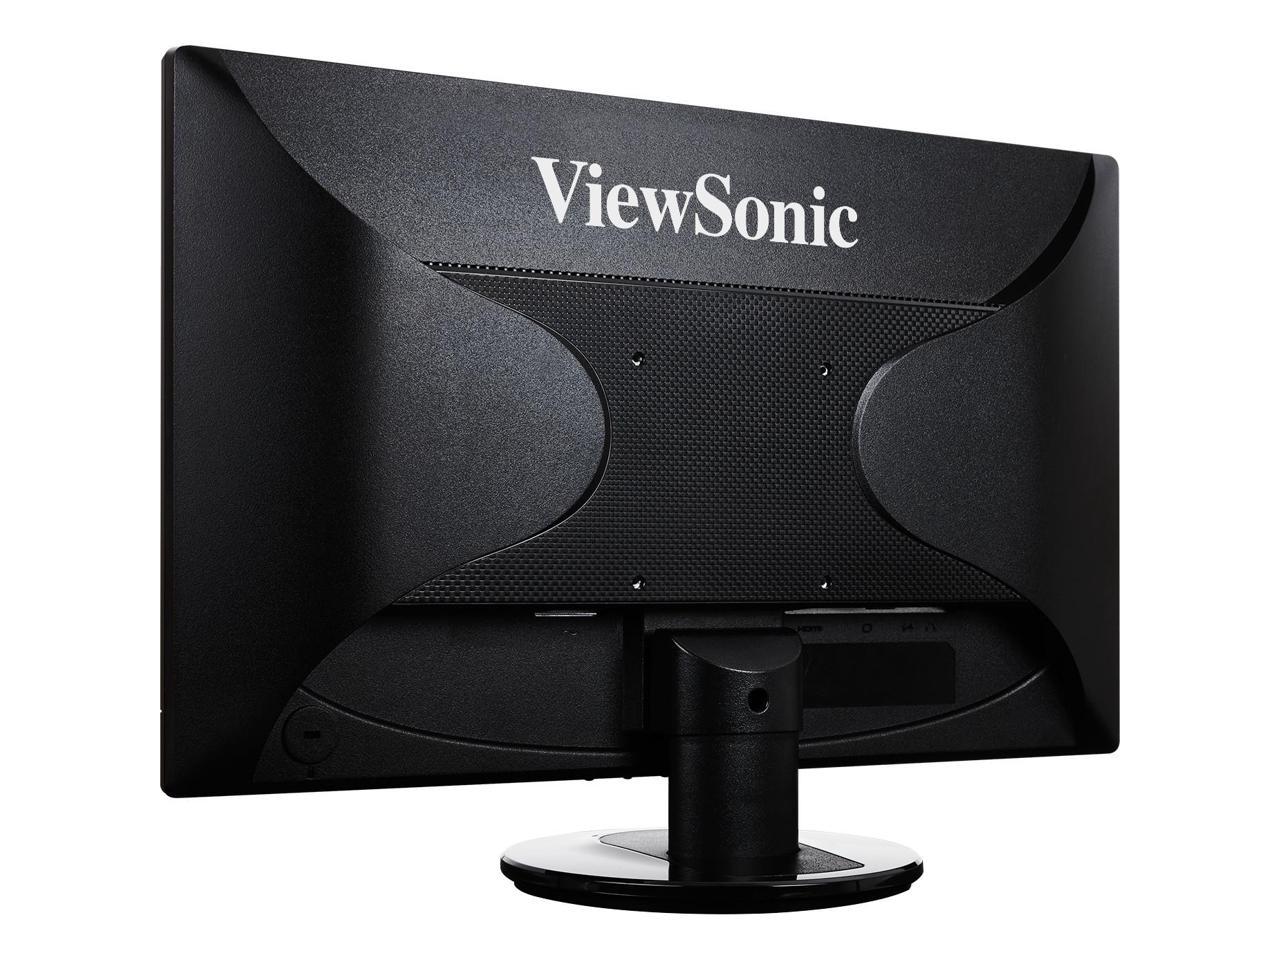 Viewsonic Va2246mh Led 22 Actual Size 215 Full Hd 1920 X 1080 Vga Hdmi Built In Speakers 4770